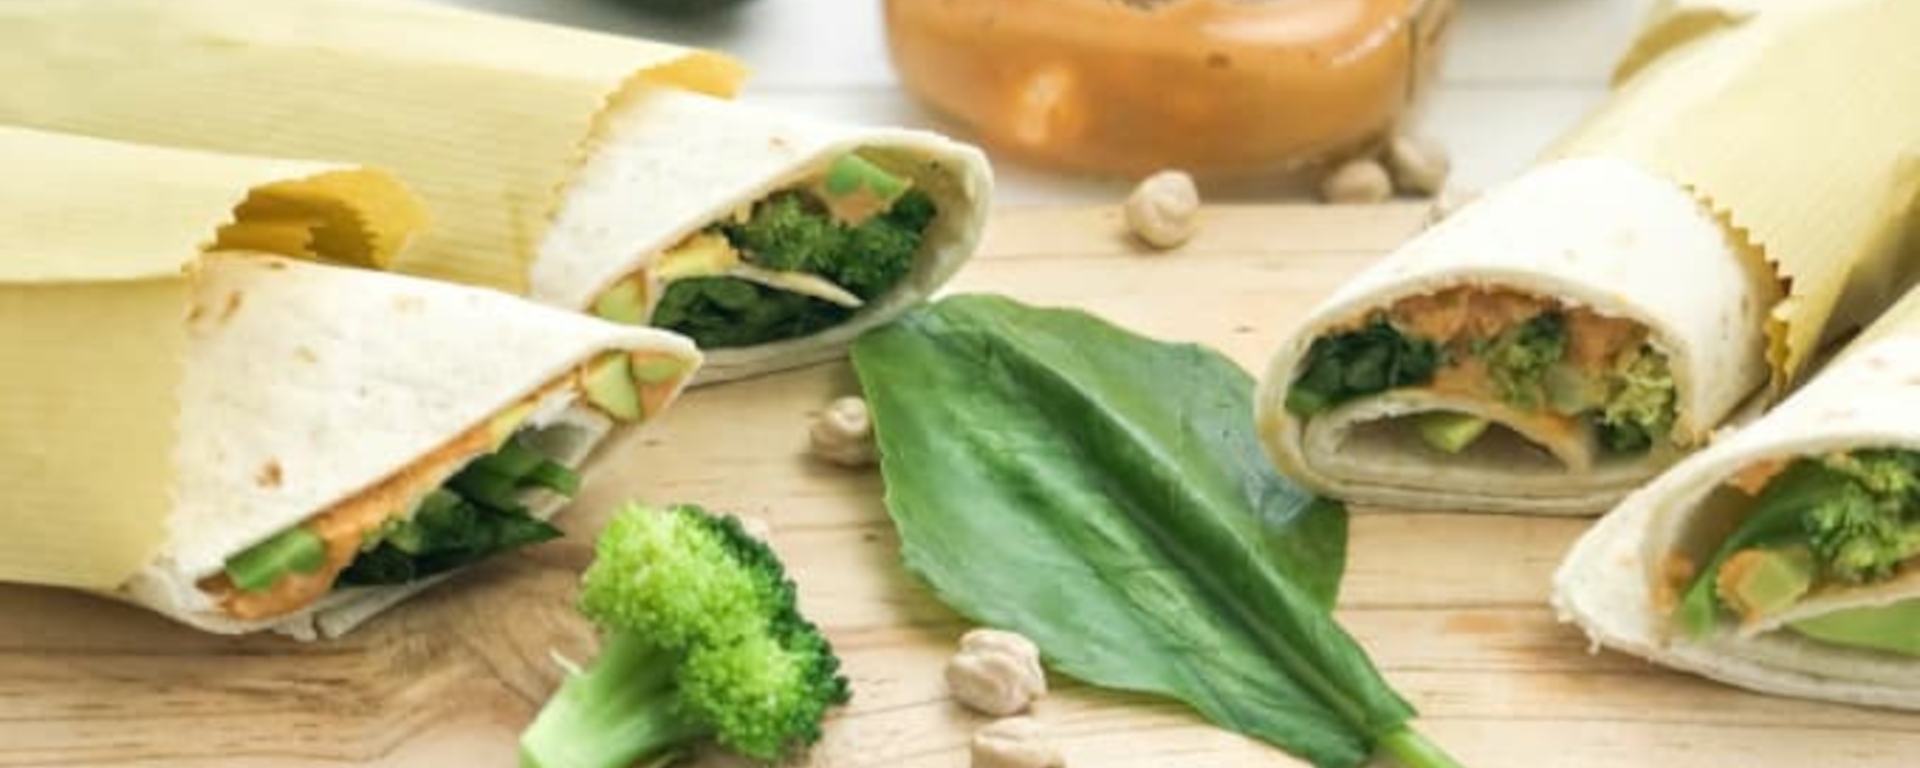 LuvMyRecipe.com - Kale, Broccoli and Avocado Hummus Wraps Featured